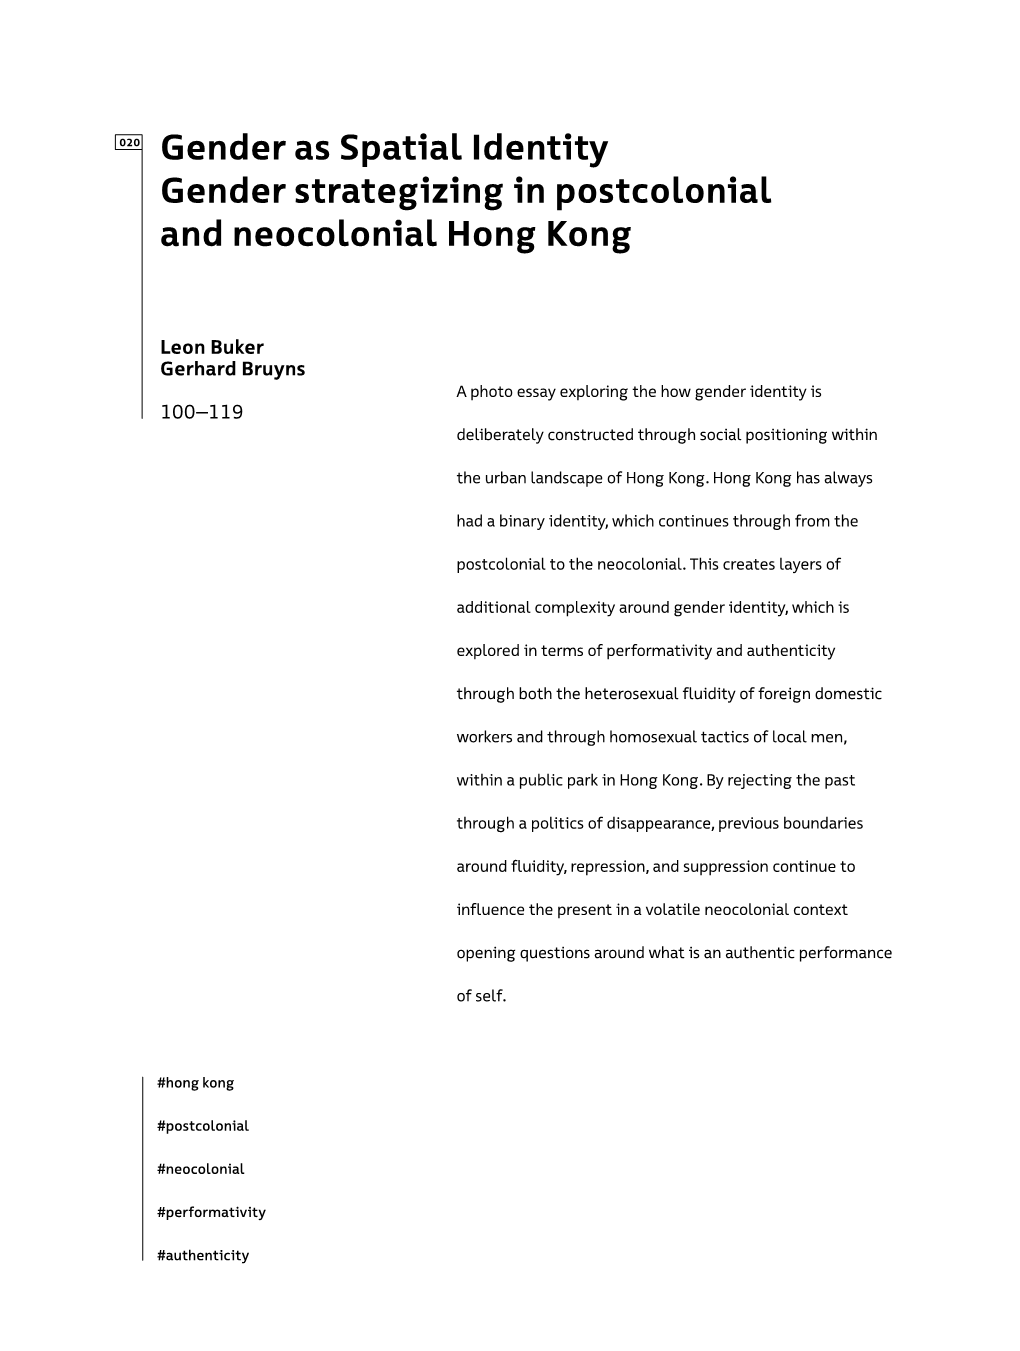 Gender As Spatial Identity Gender Strategizing in Postcolonial and Neocolonial Hong Kong